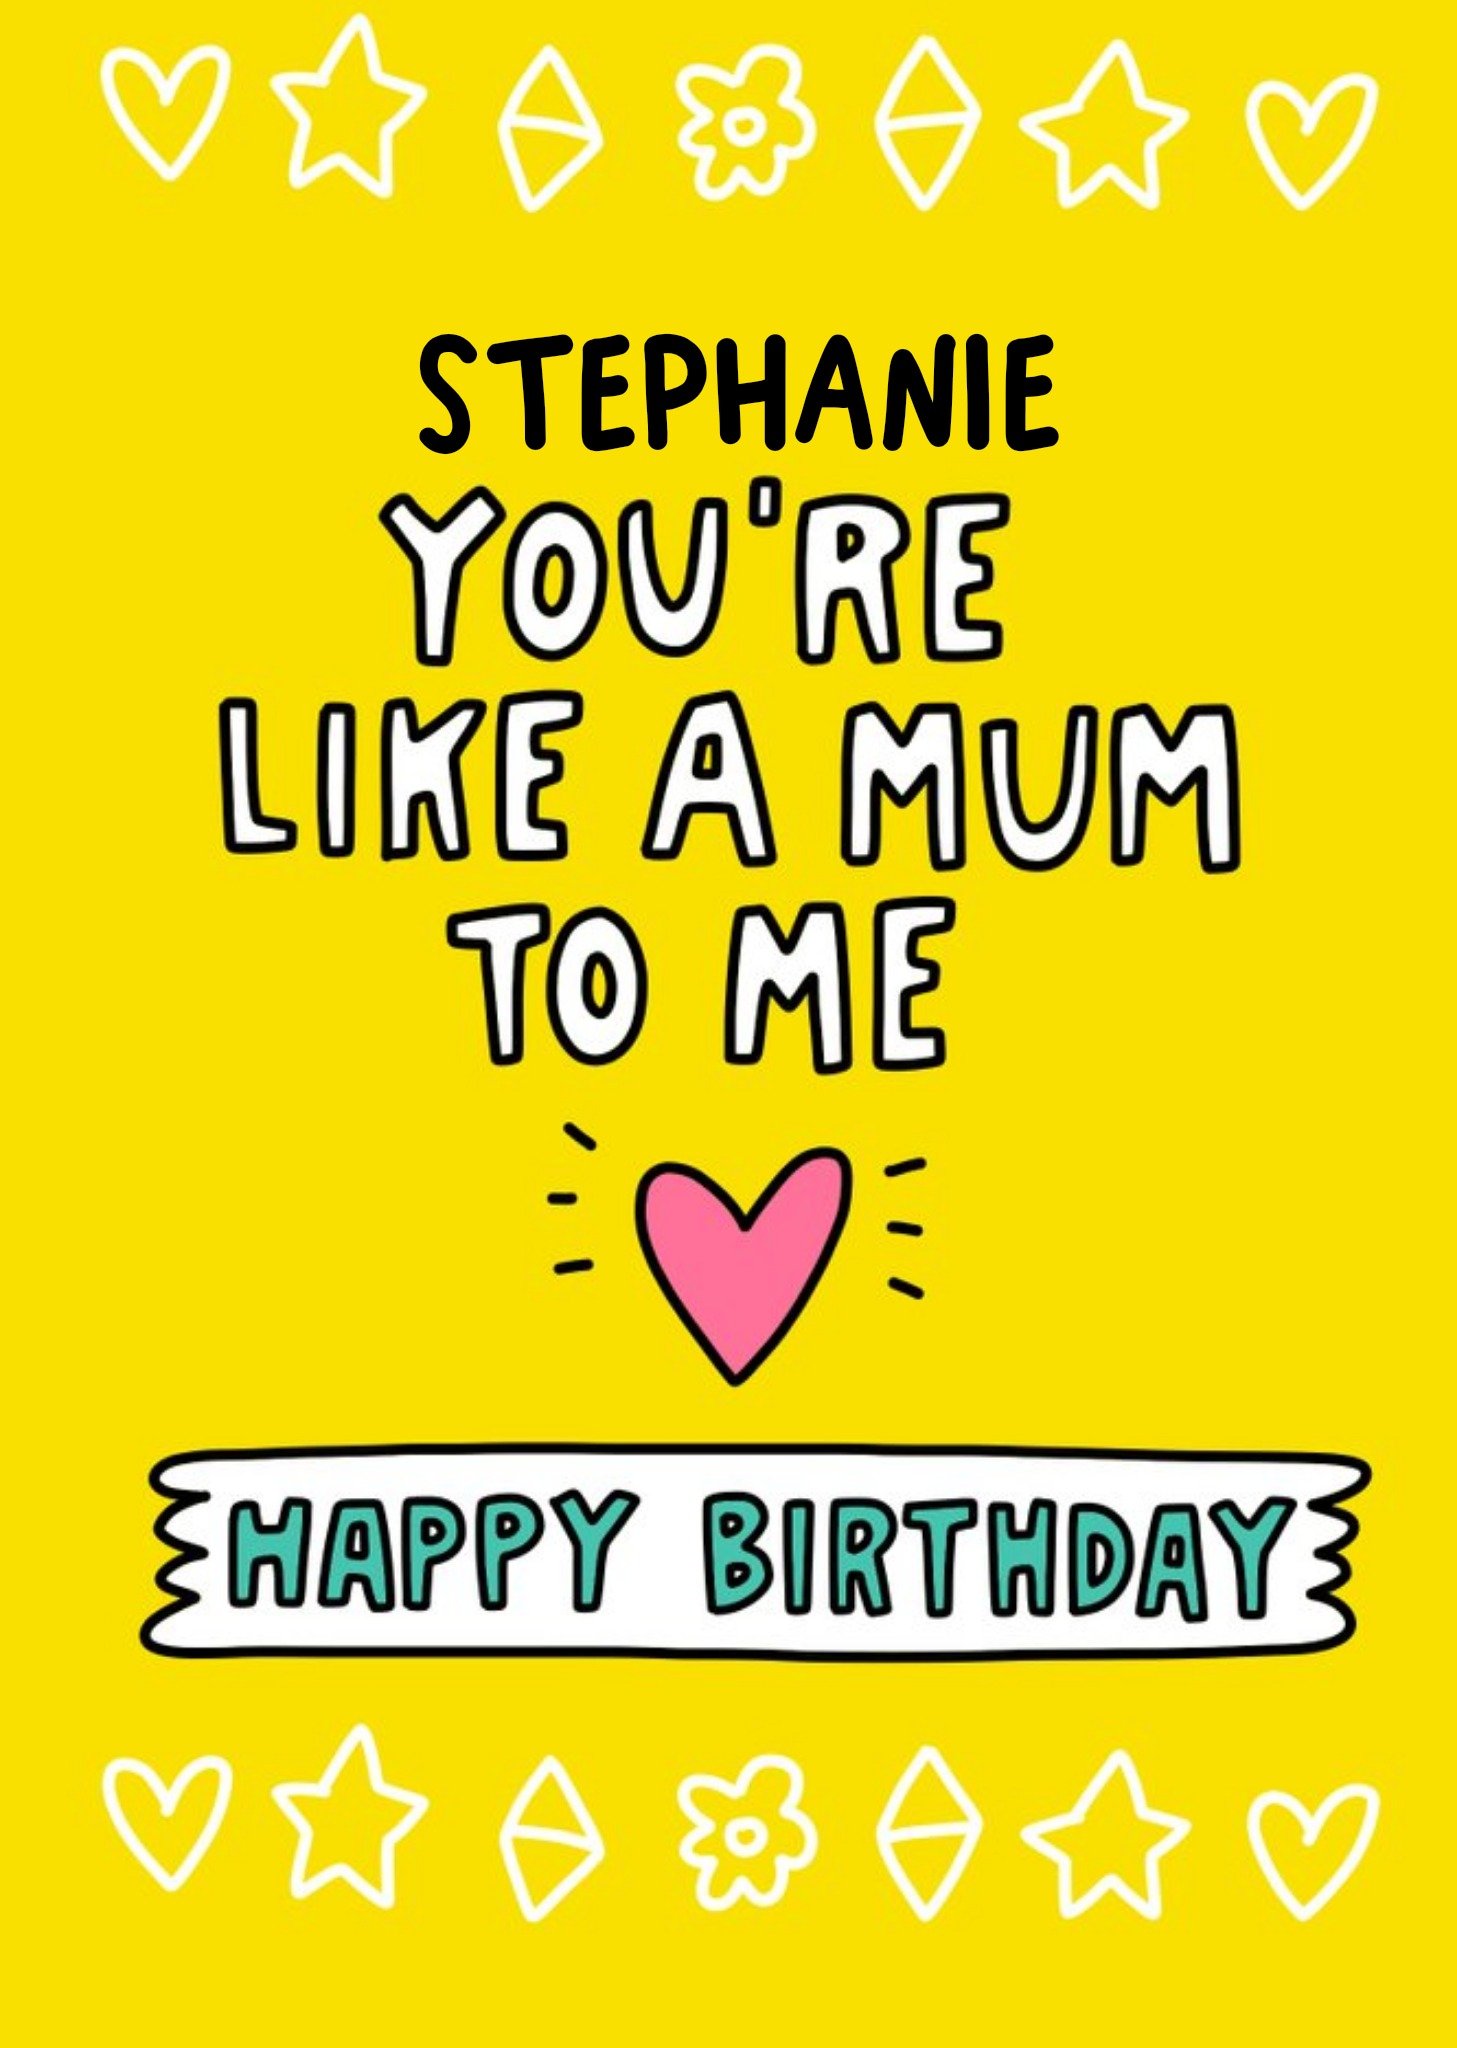 Moonpig Angela Chick Like A Mum To Me Stepmum Happy Birthday Card, Large